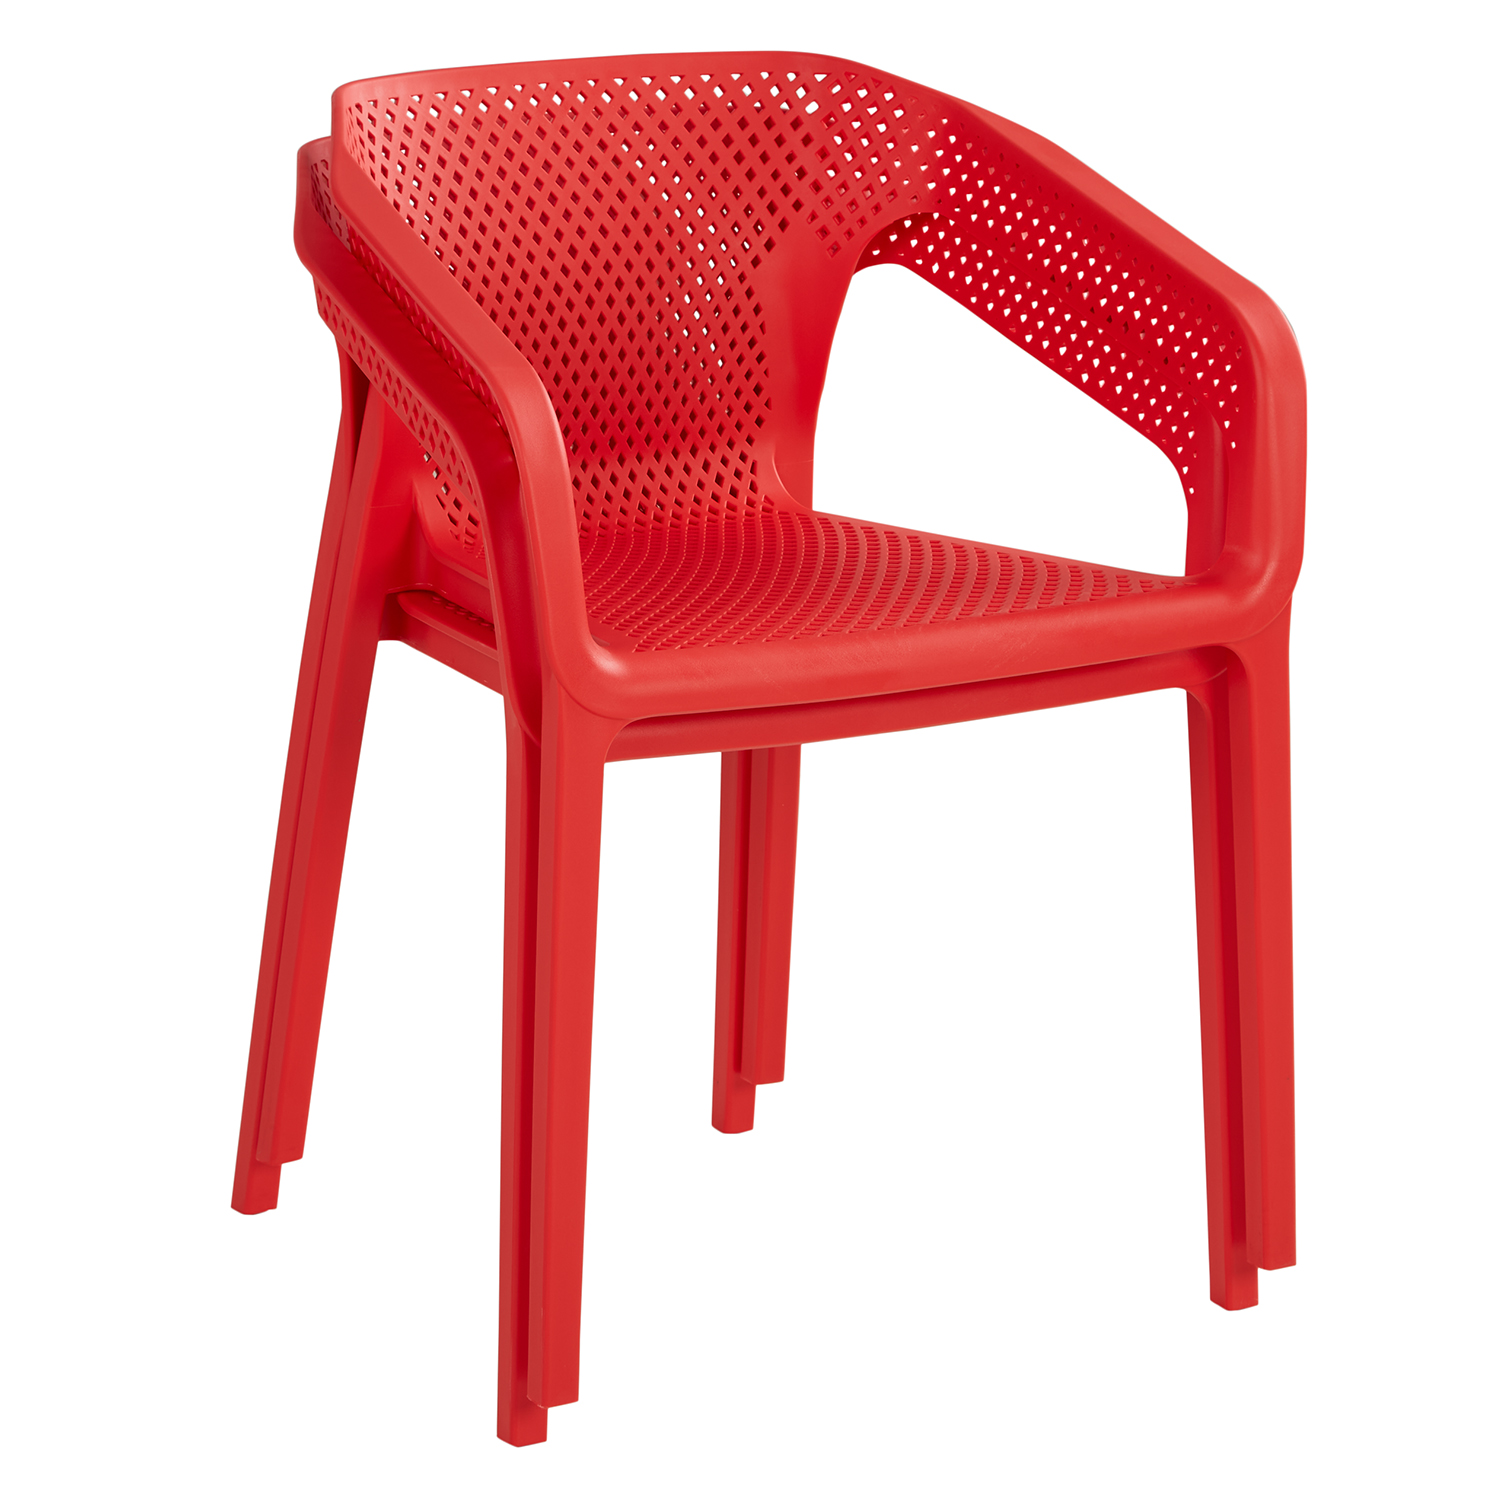 Gartenstuhl mit Armlehnen 6er Set Gartensessel Rot Stühle Kunststoff Stapelstühle Balkonstuhl Outdoor-Stuhl